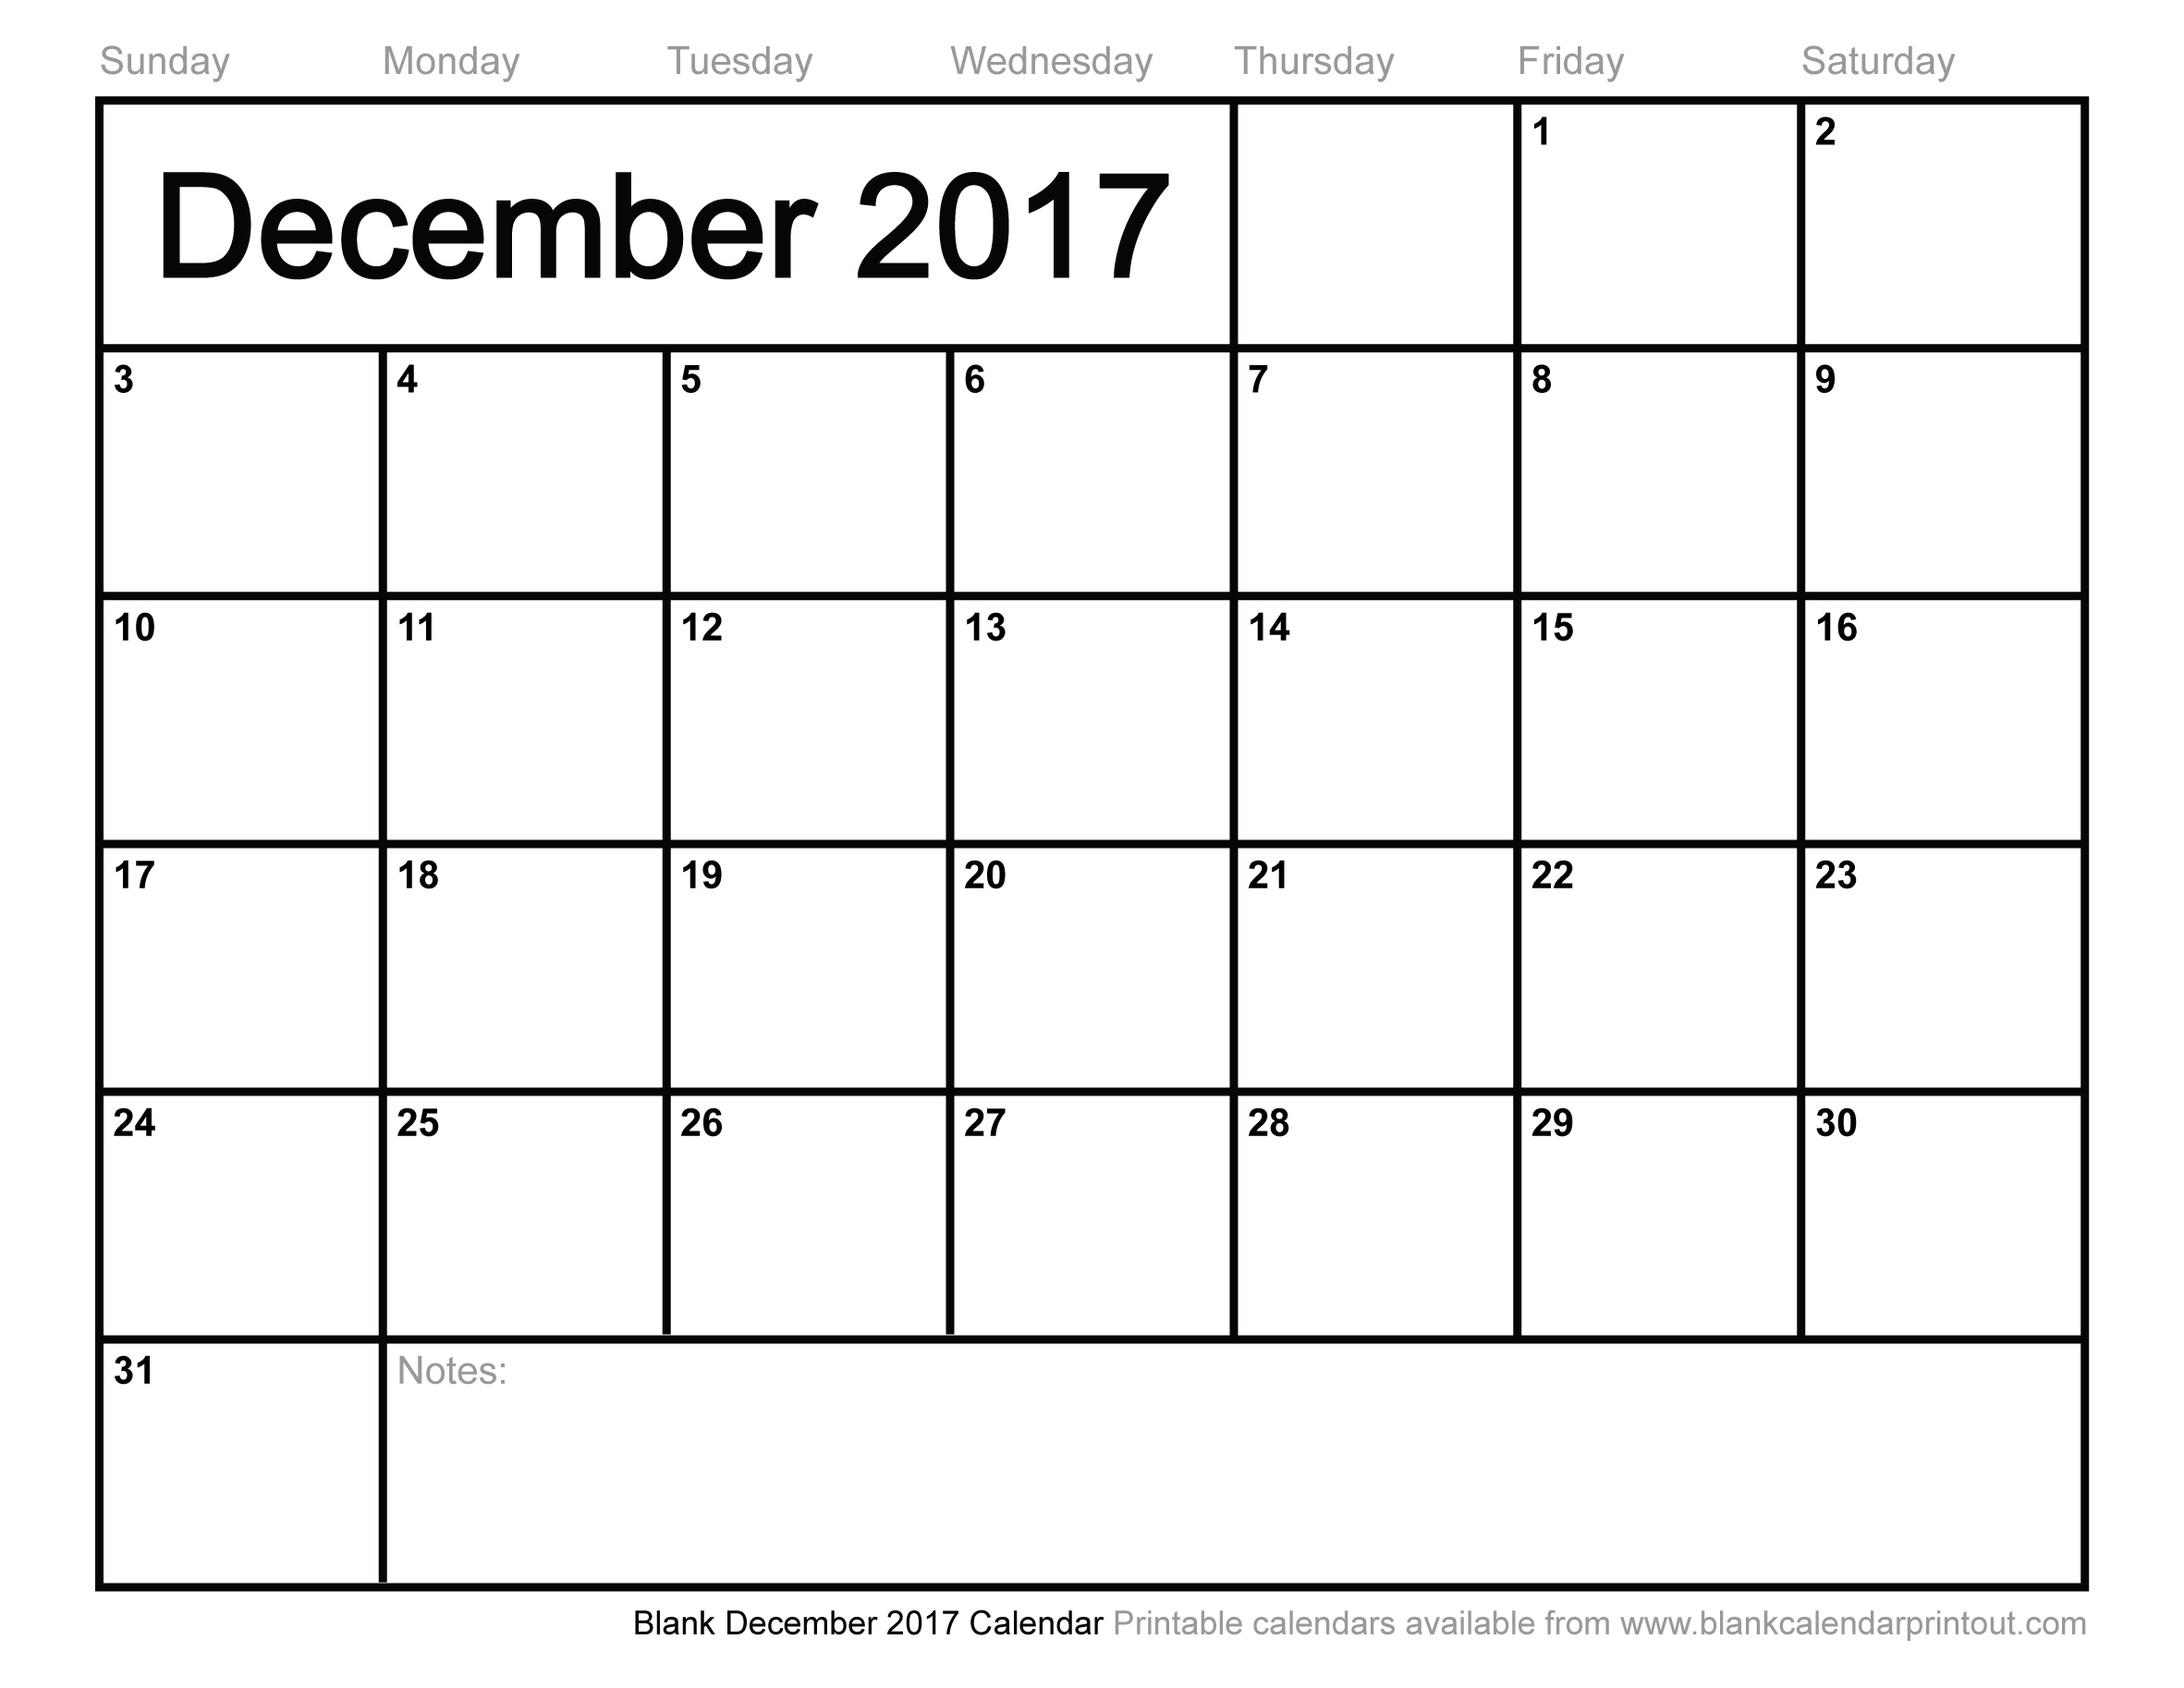 Blank December 2017 Calendar to Print